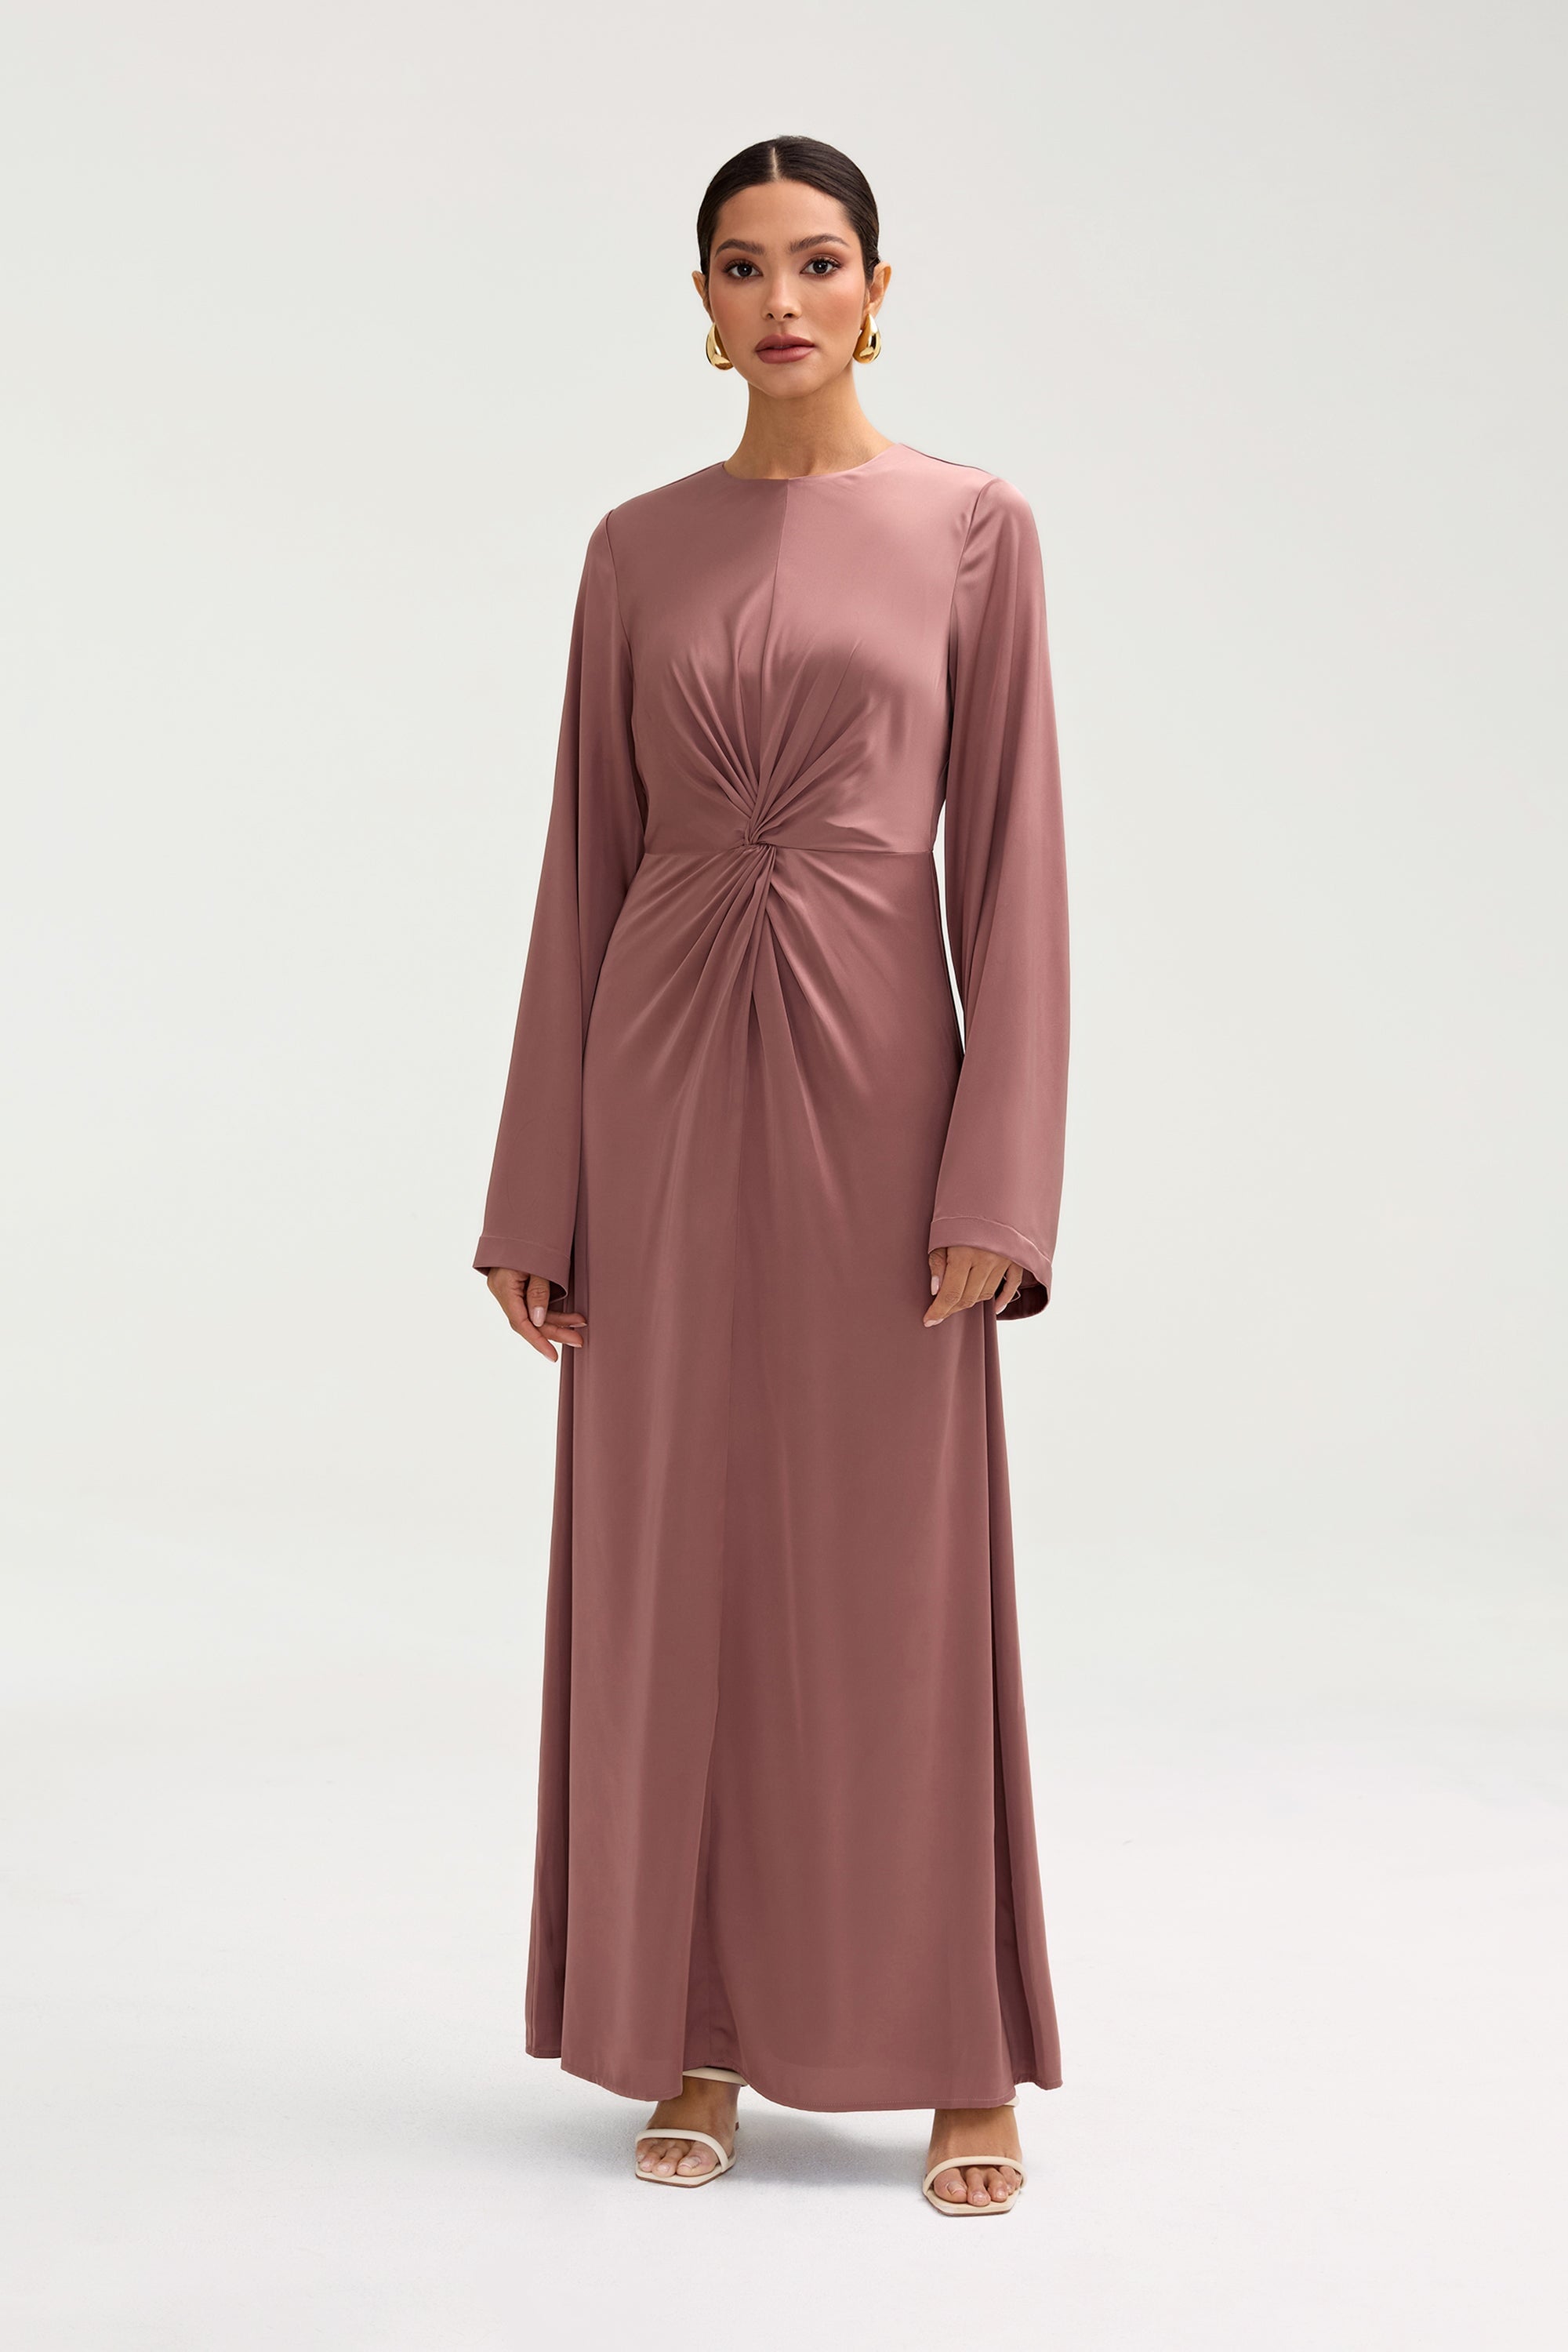 Duha Satin Twist Front Maxi Dress - Dusky Mauve Clothing Veiled 